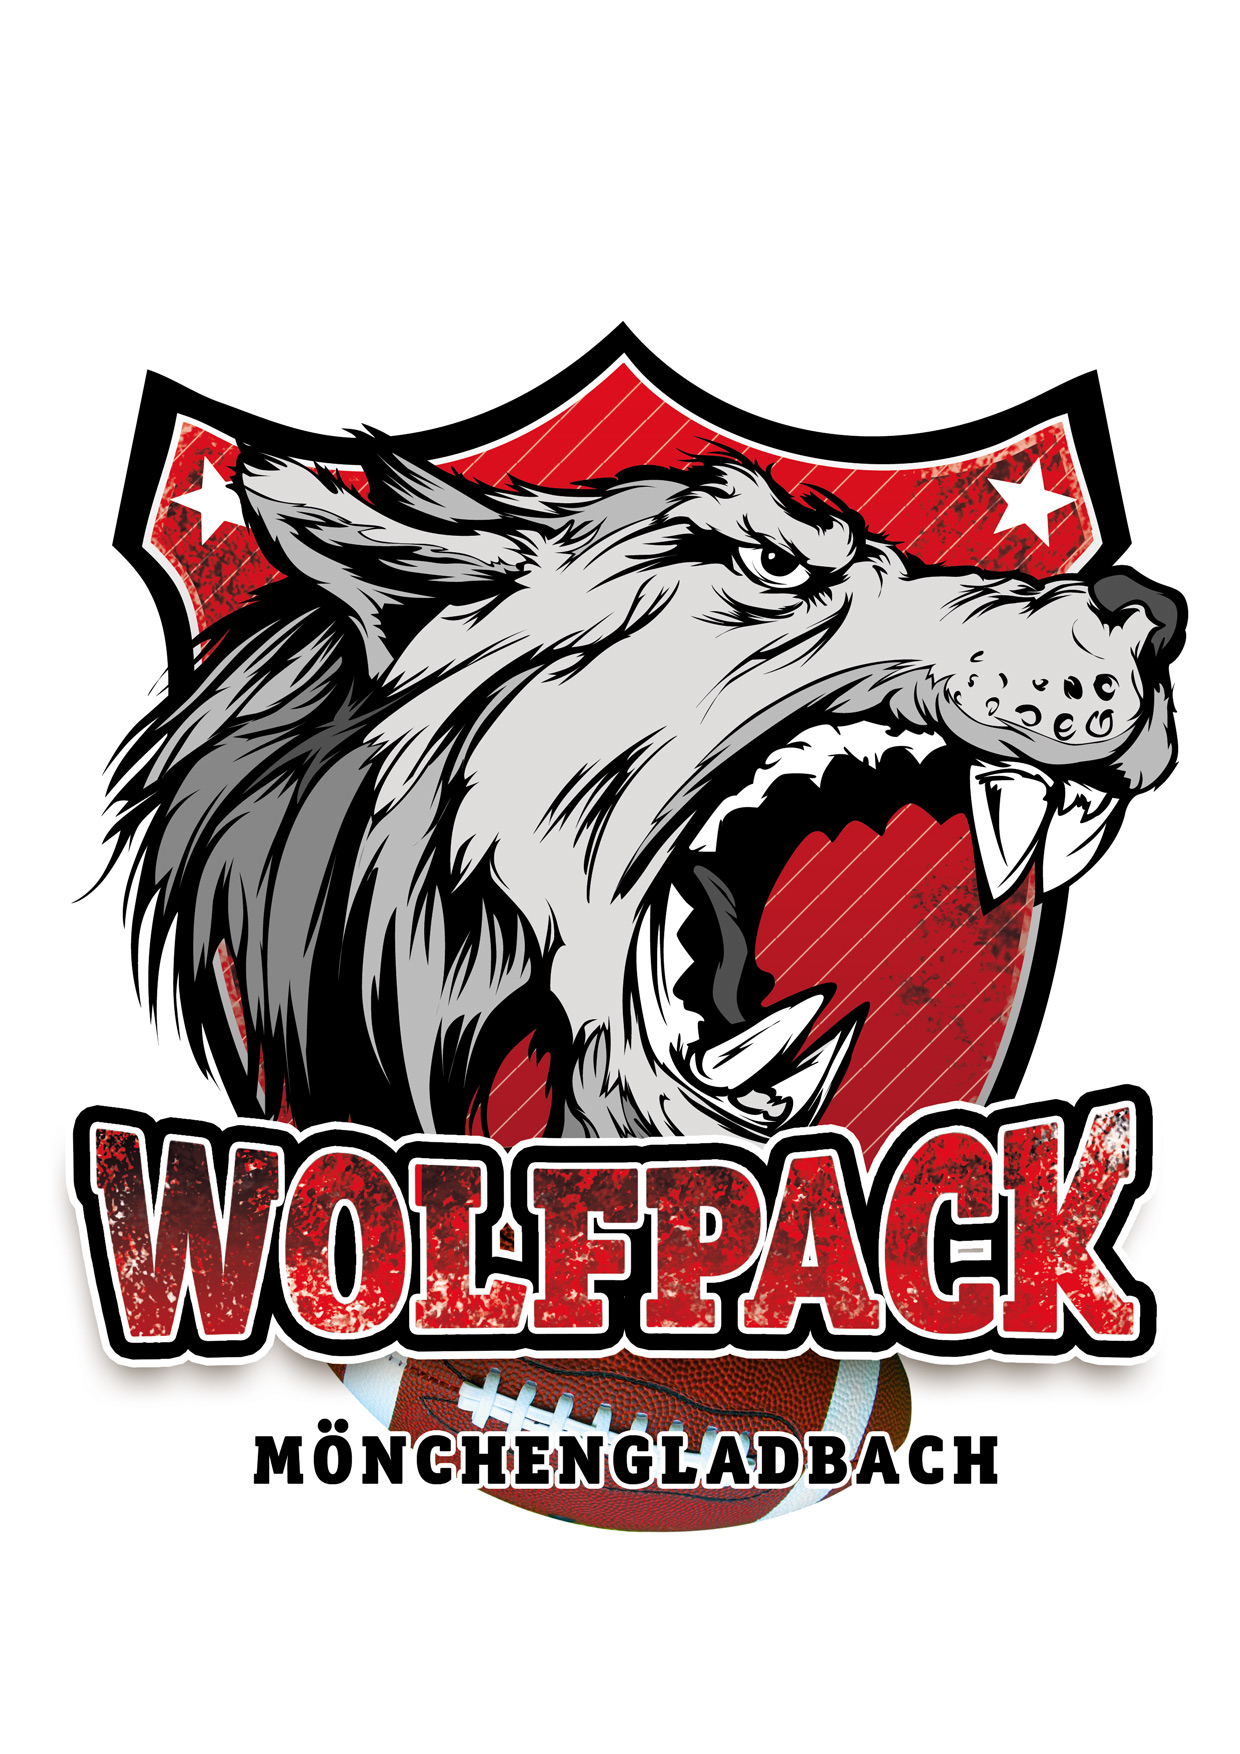 Mönchengladbach Wolfpack